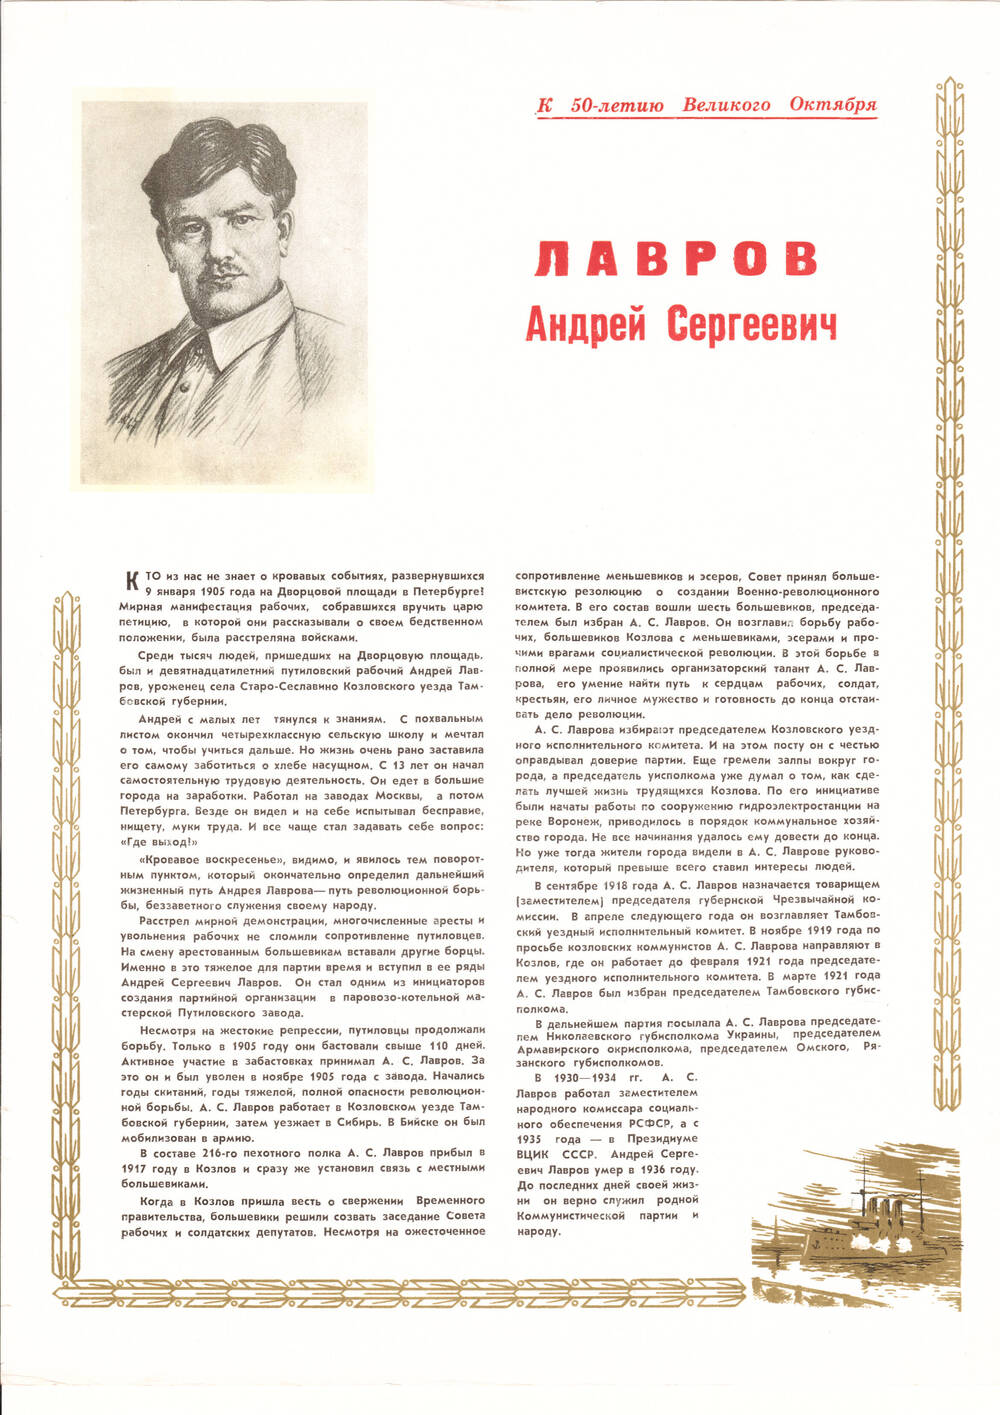 Листовка о Лаврове Андрее Сергеевиче